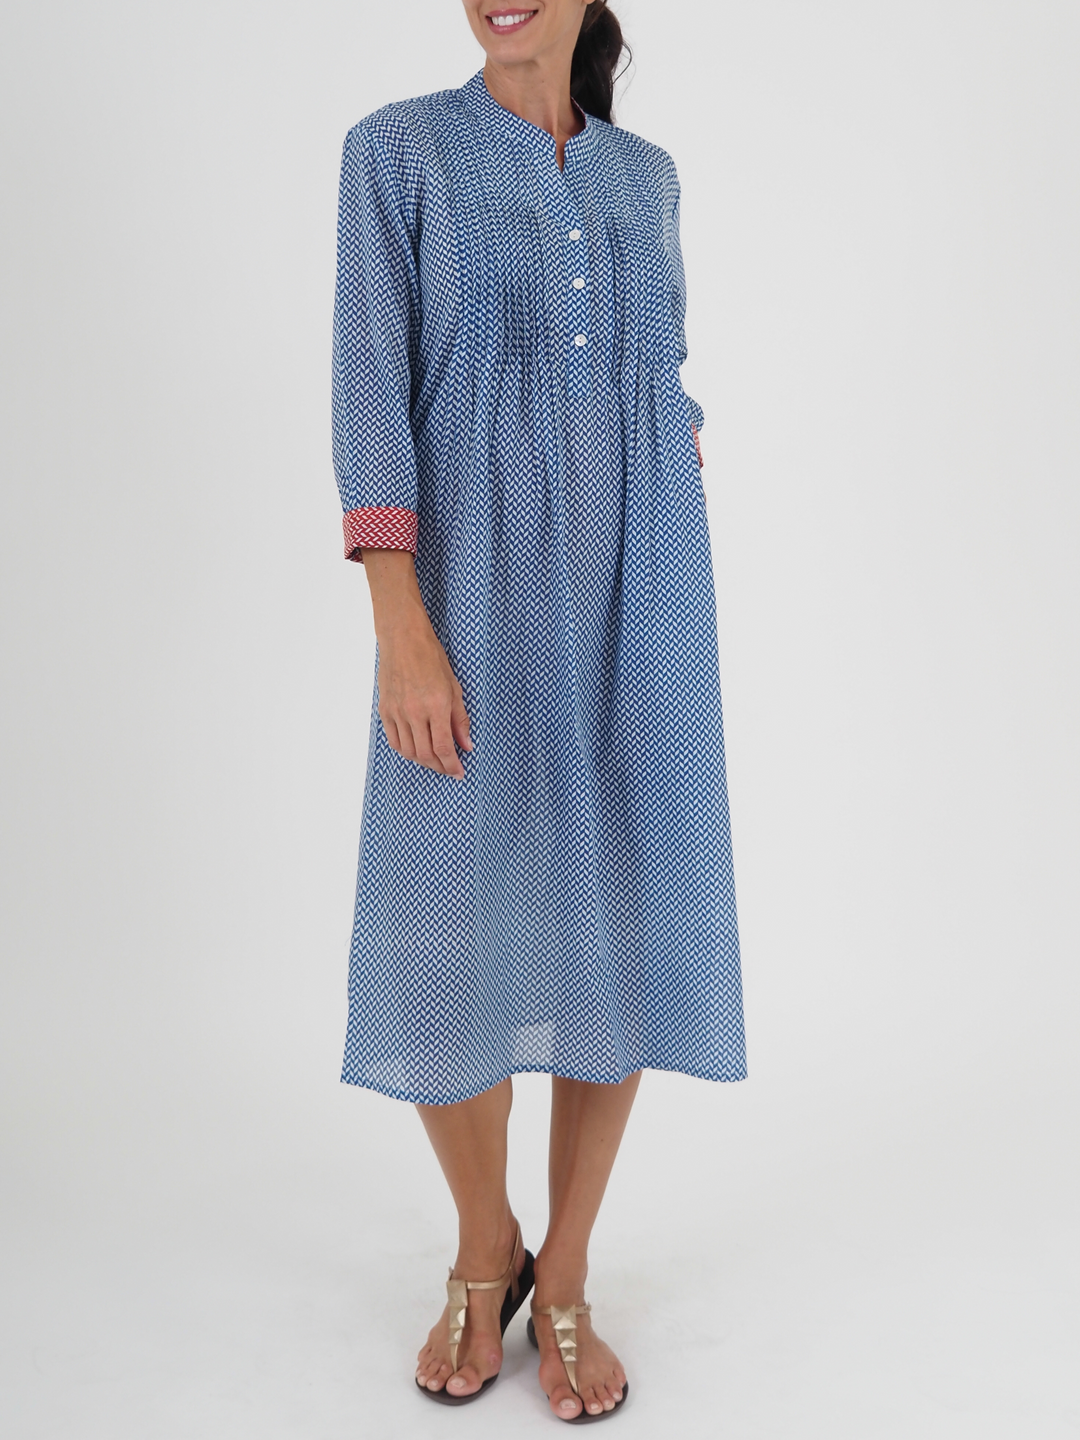 Cora Dress in Printed Cotton – Charlotte Kellogg